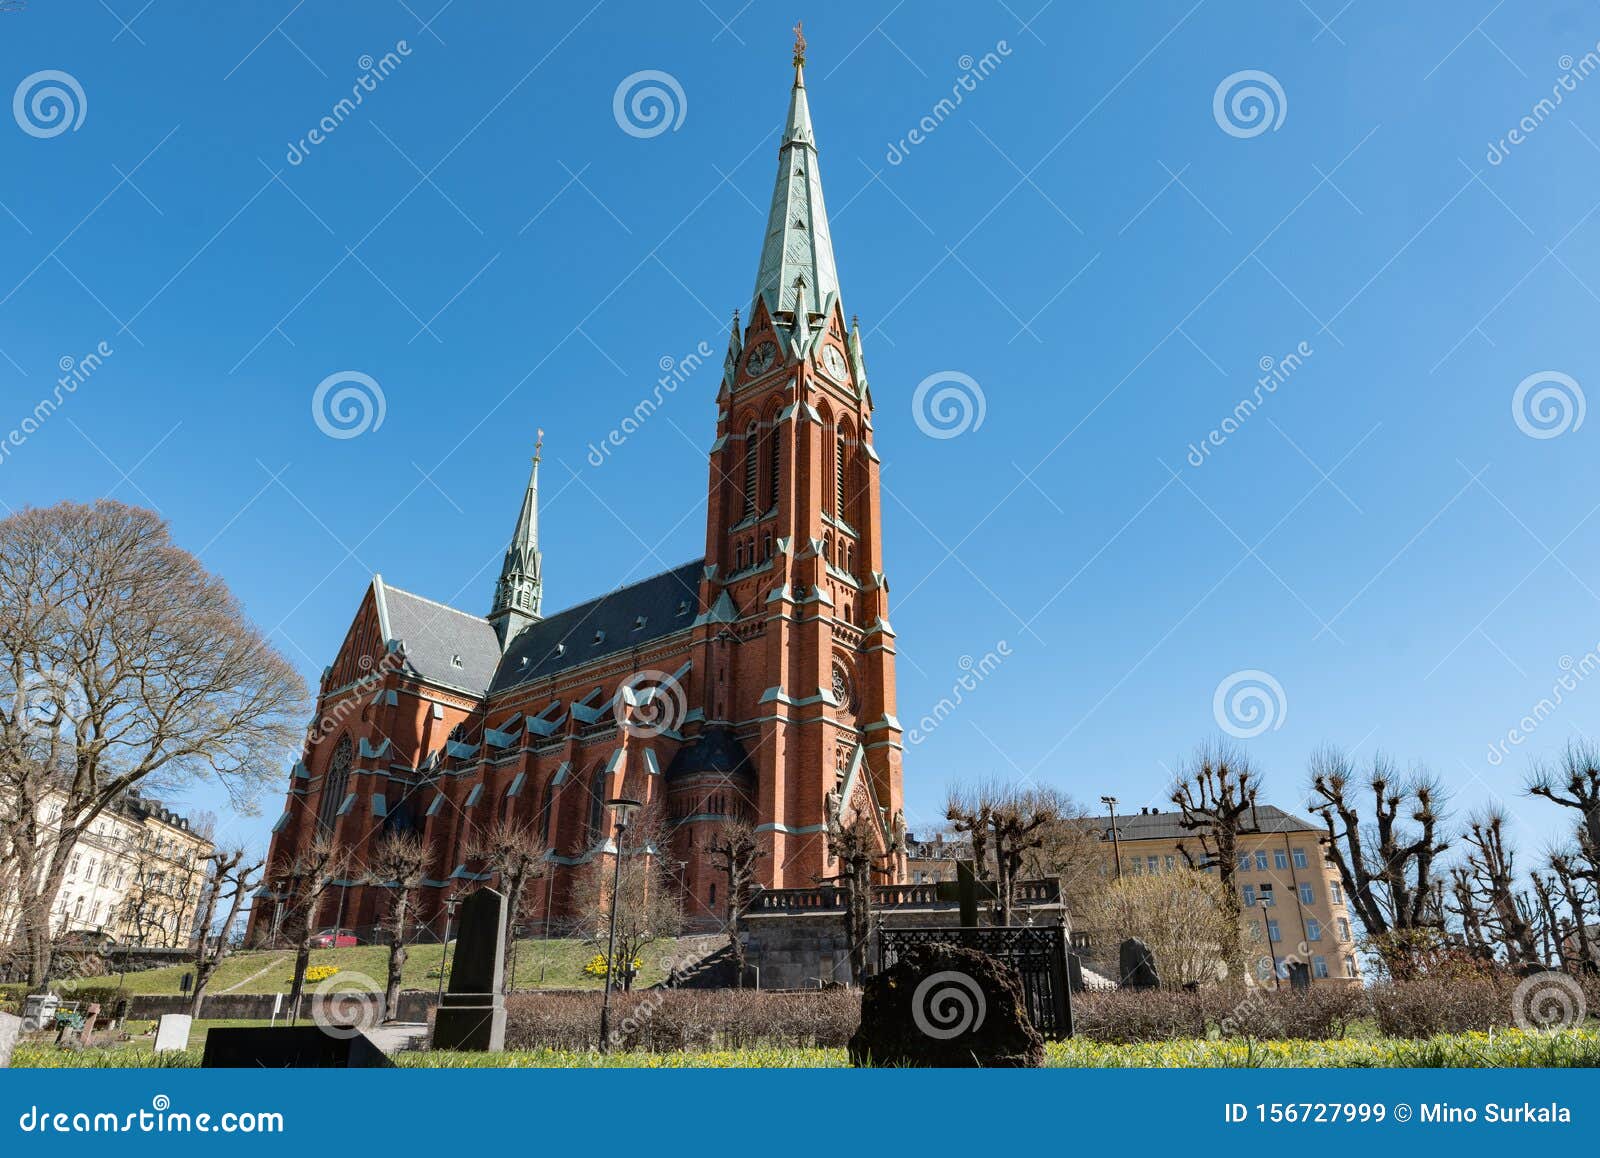 saint john church sankt johannes kyrka in stockholm, sweden